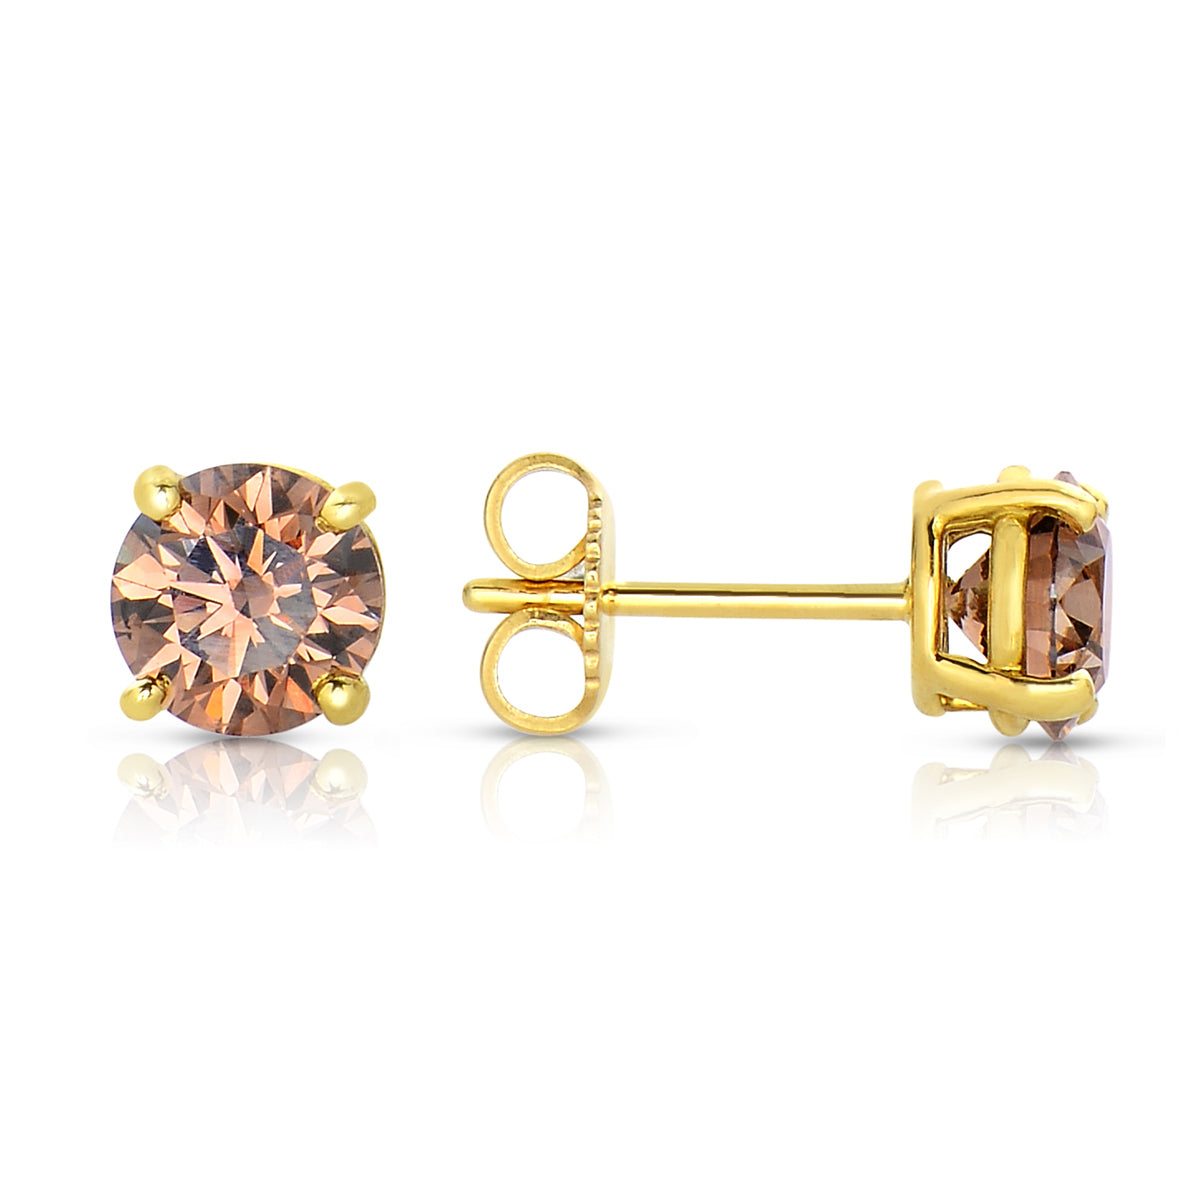 Sabel Collection 18K Yellow Gold Fancy Mocha Round Diamond Stud Earrings